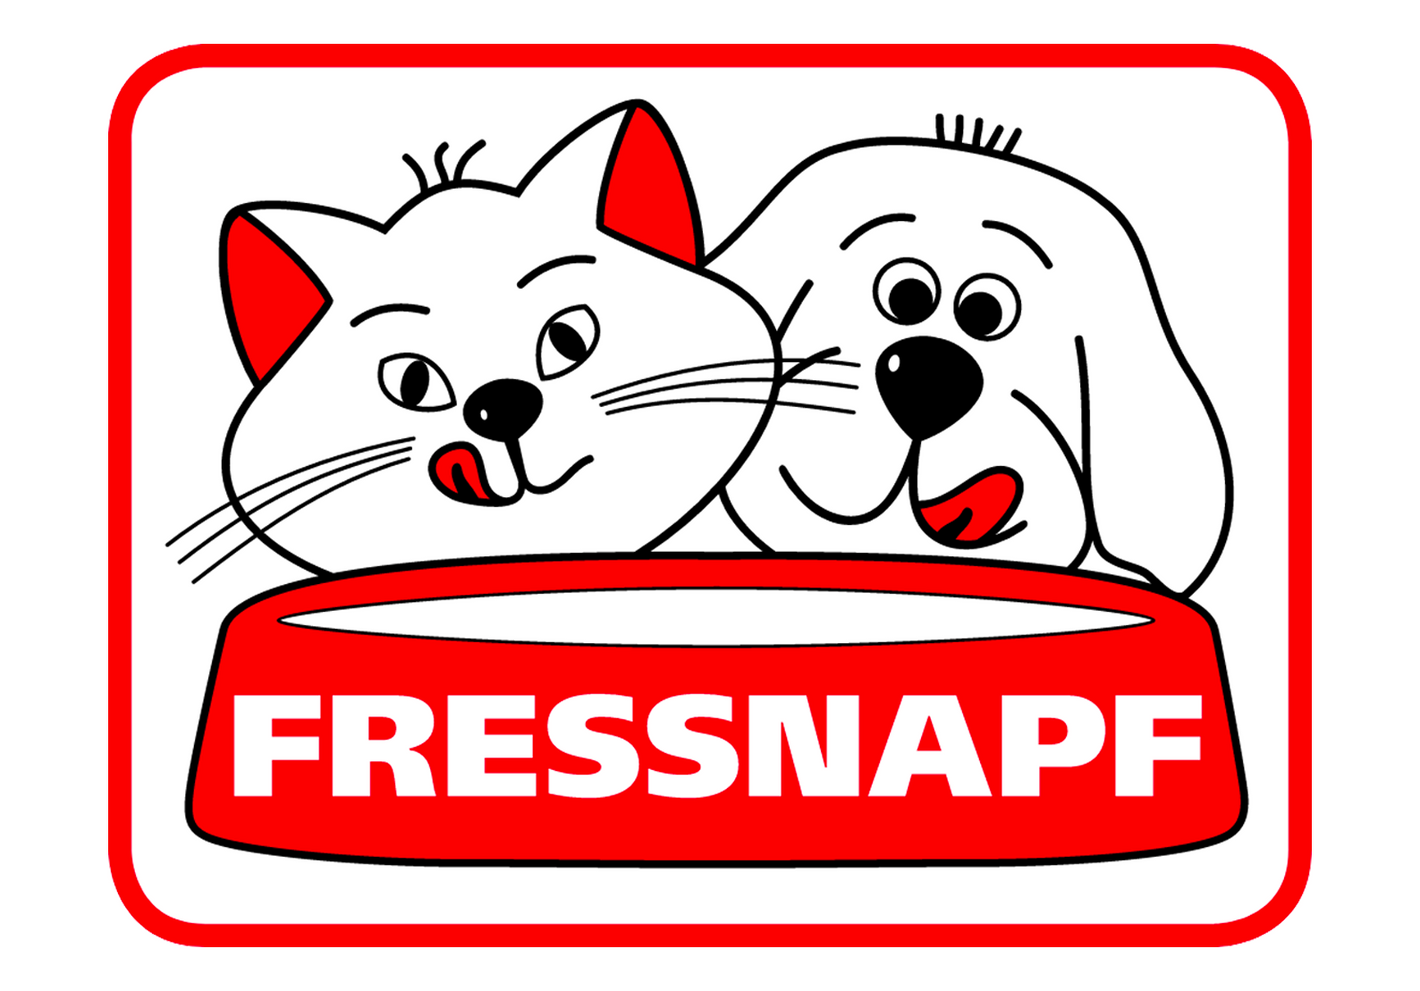 Logo Fressnapf